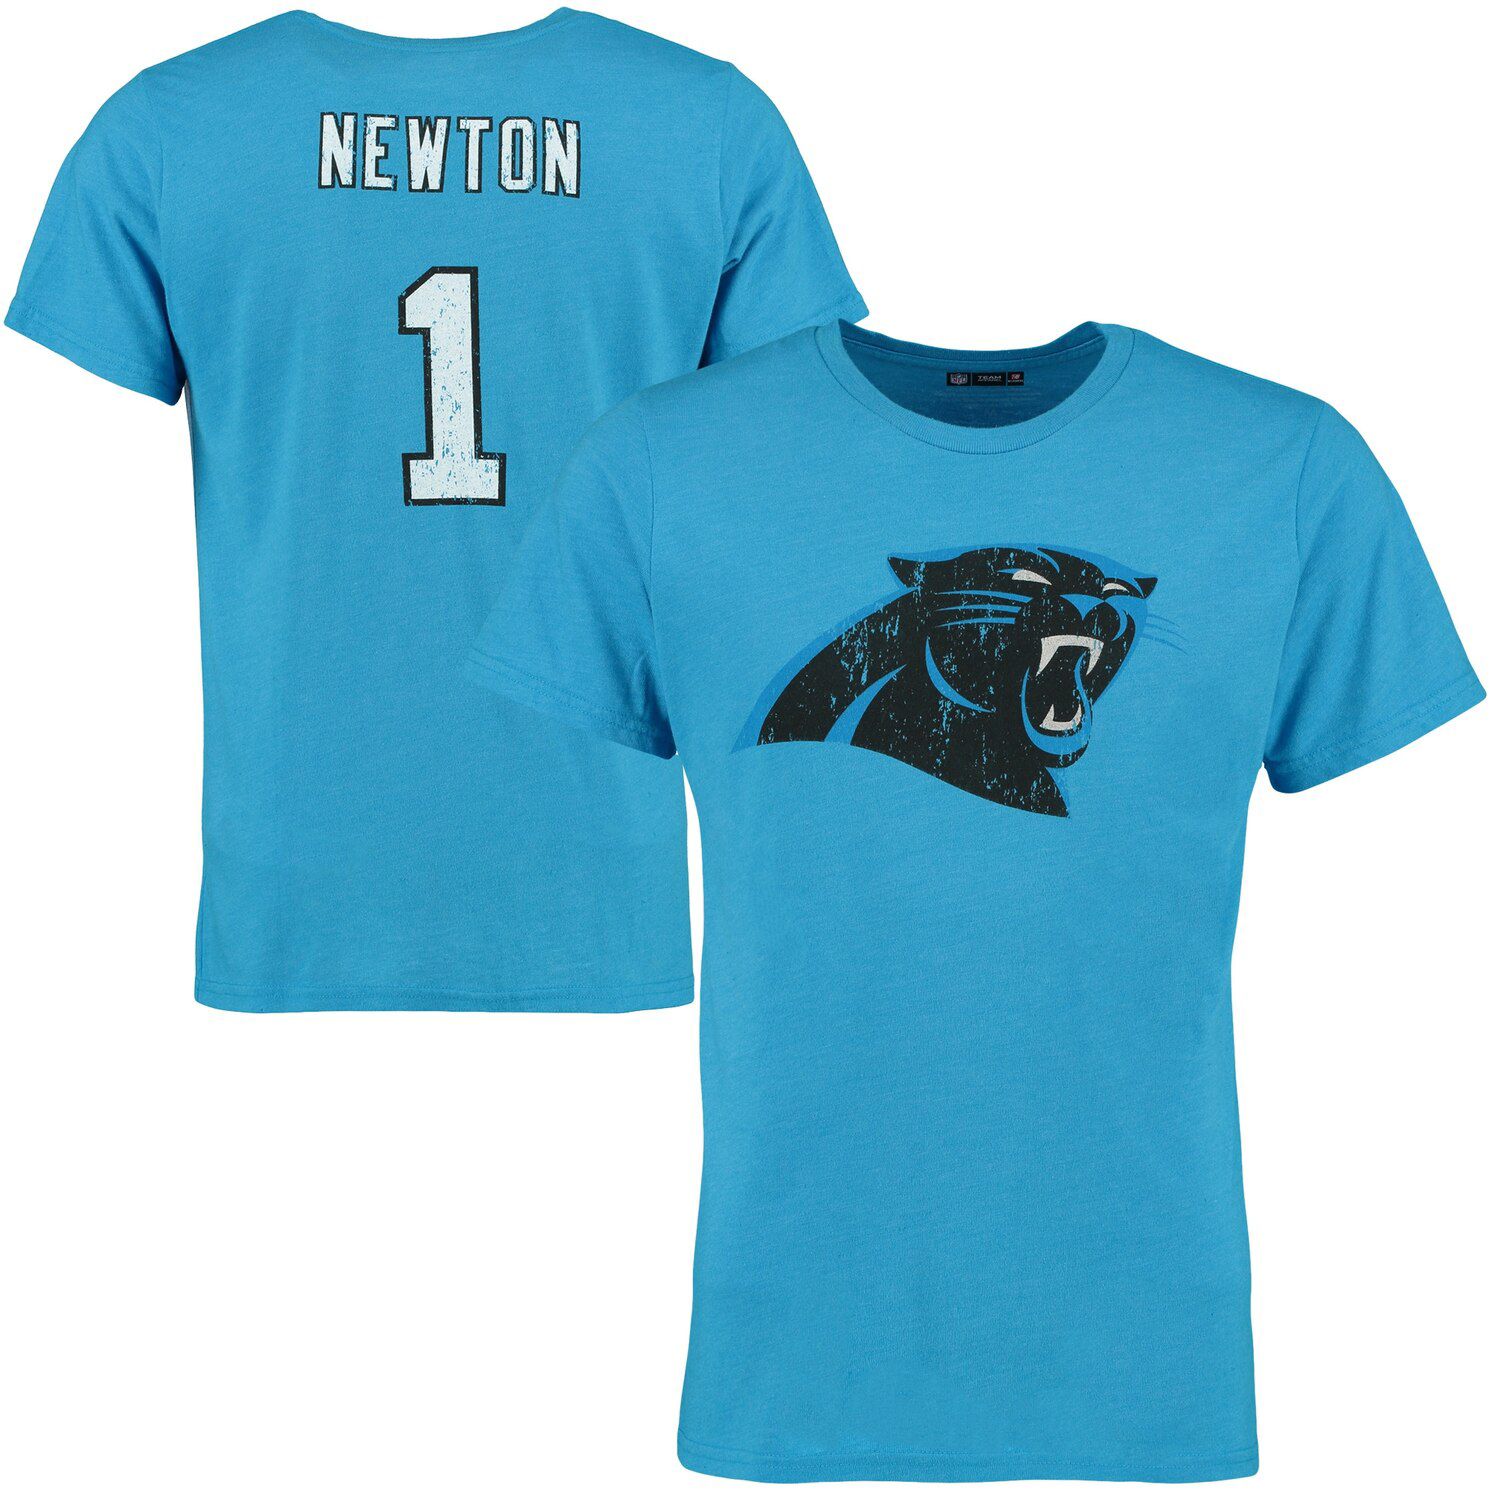 cam newton jersey number